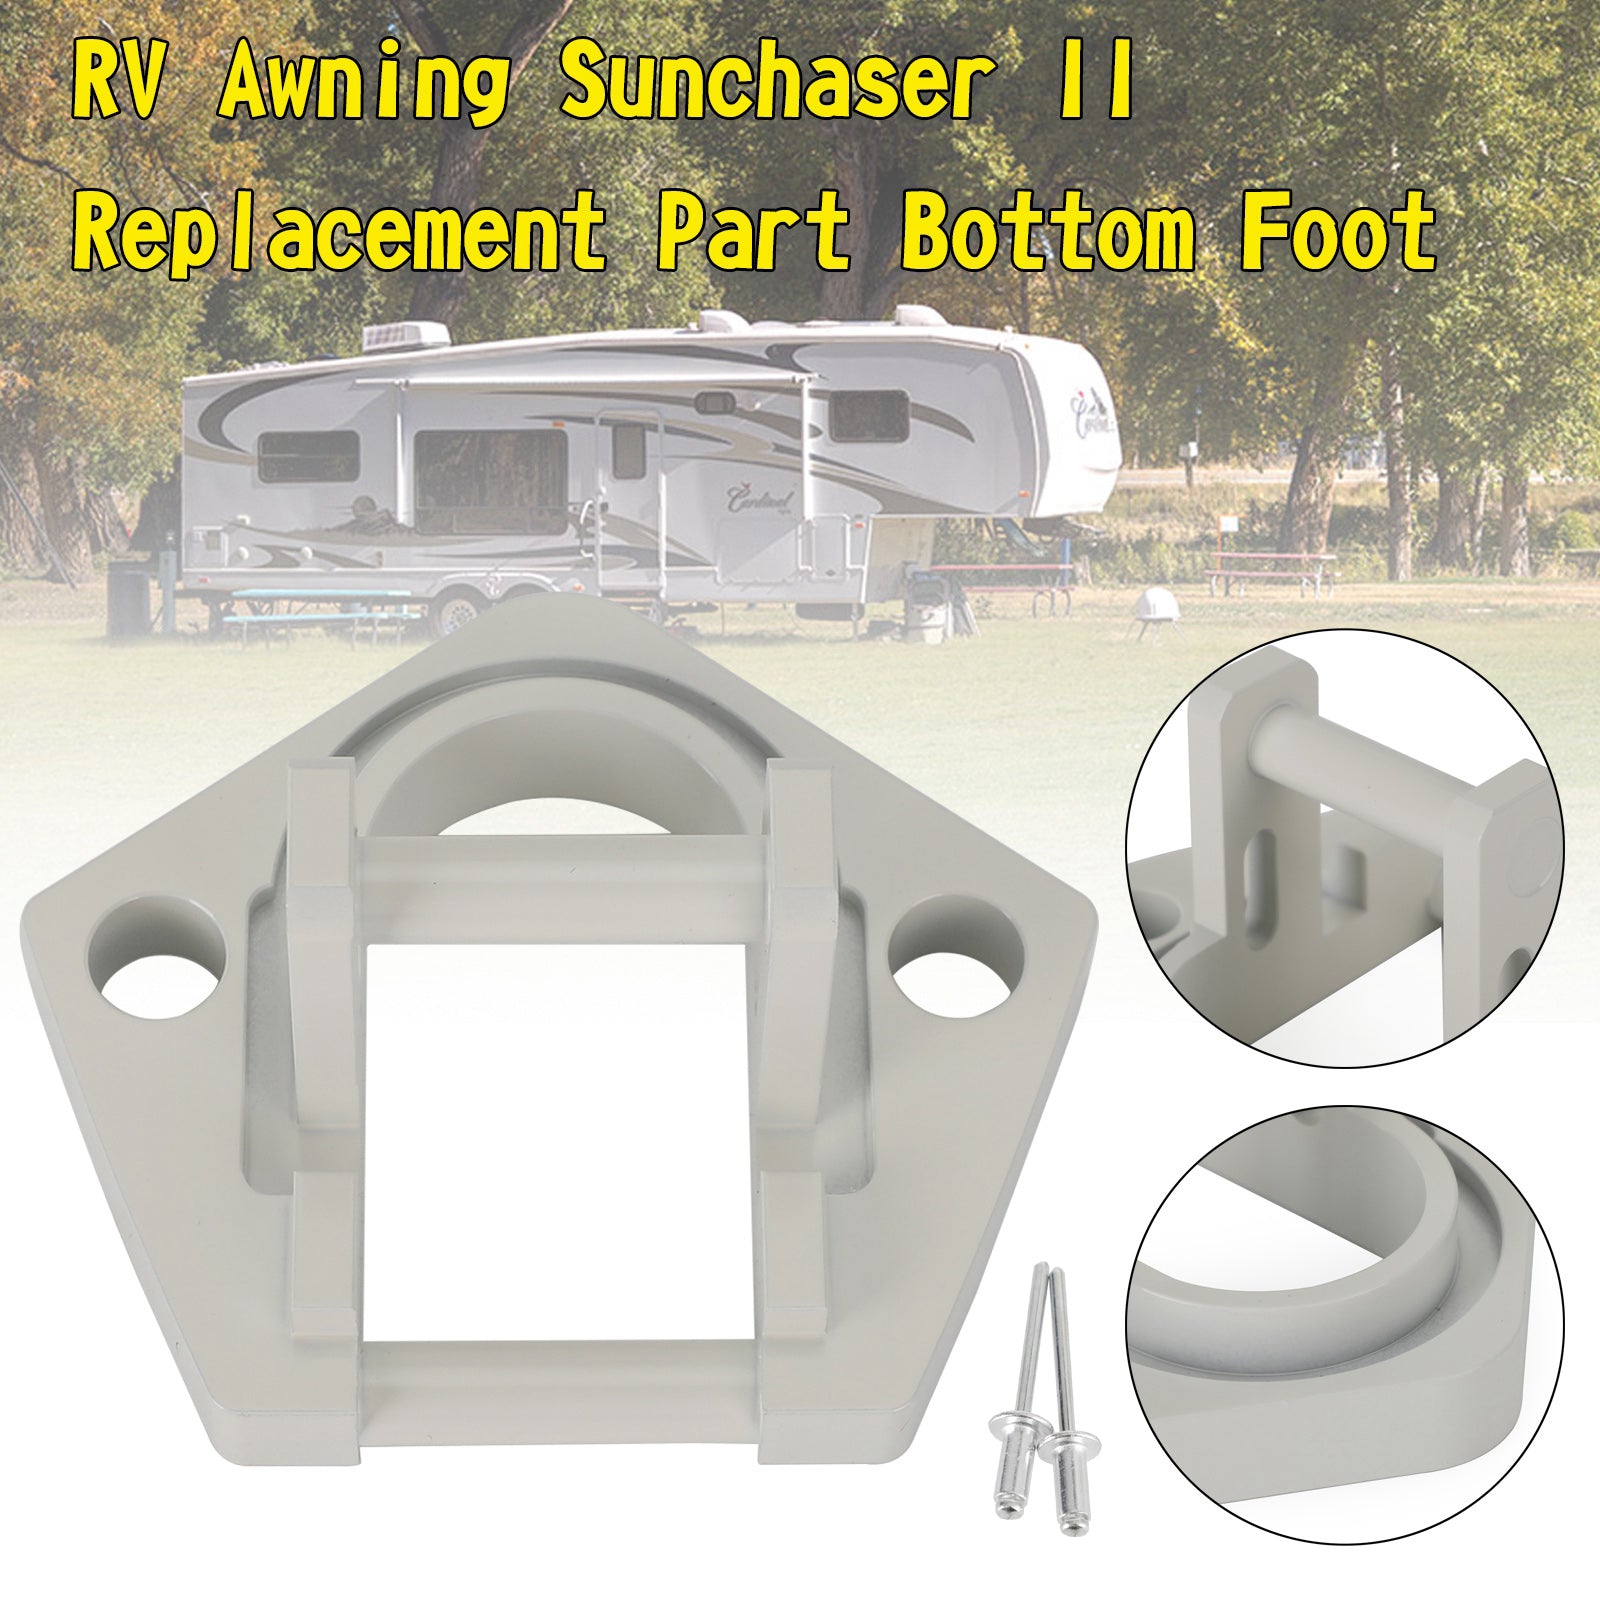 Hardware de aluminio para toldo RV para reemplazo de soporte inferior de toldo Sunchaser II U